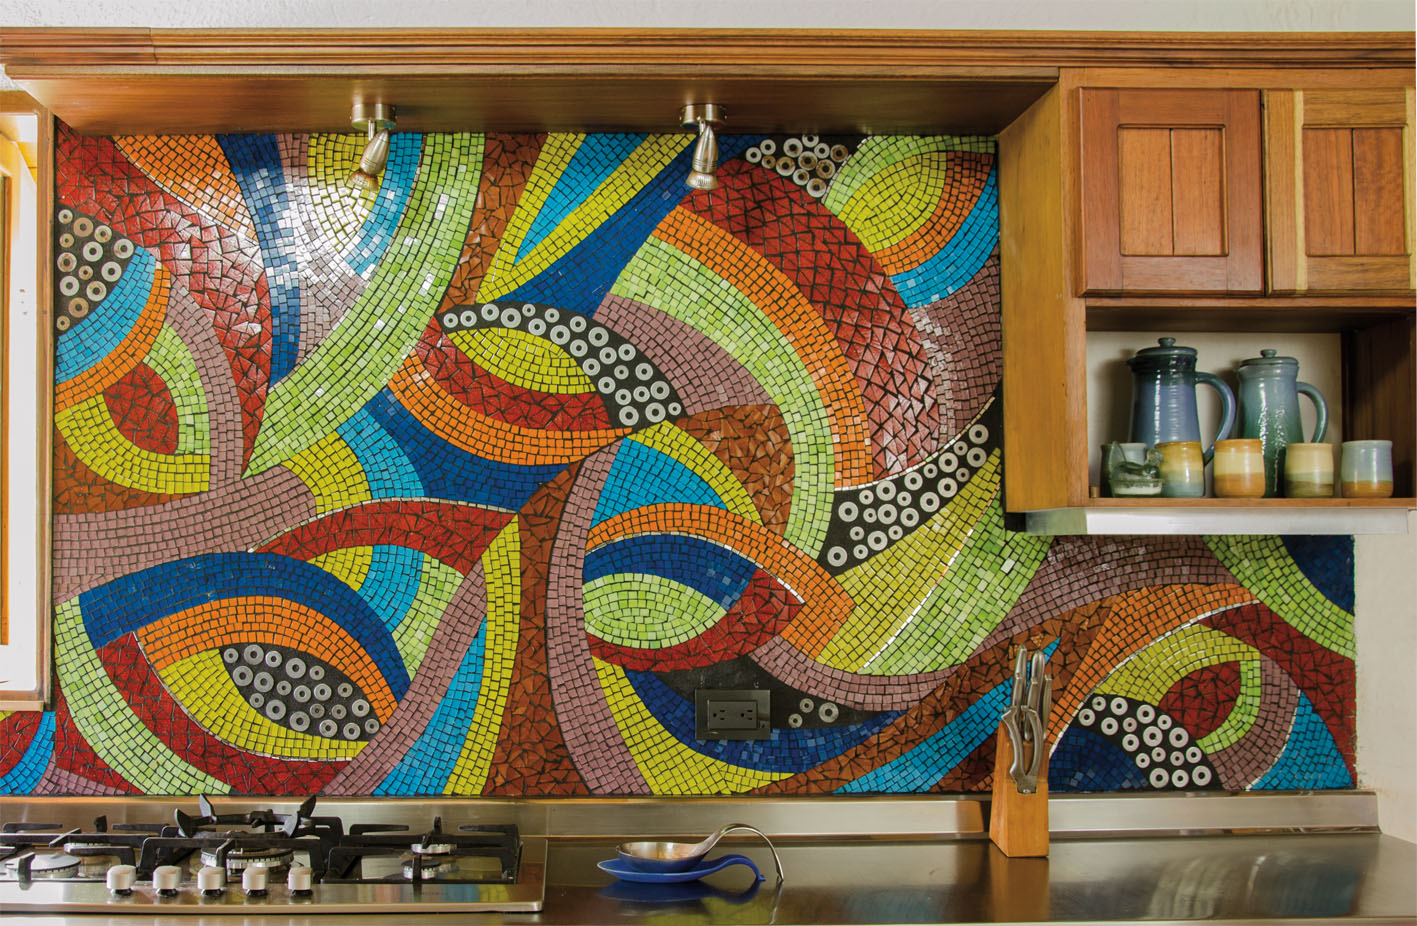 Large mosaic backsplash in very bright colors